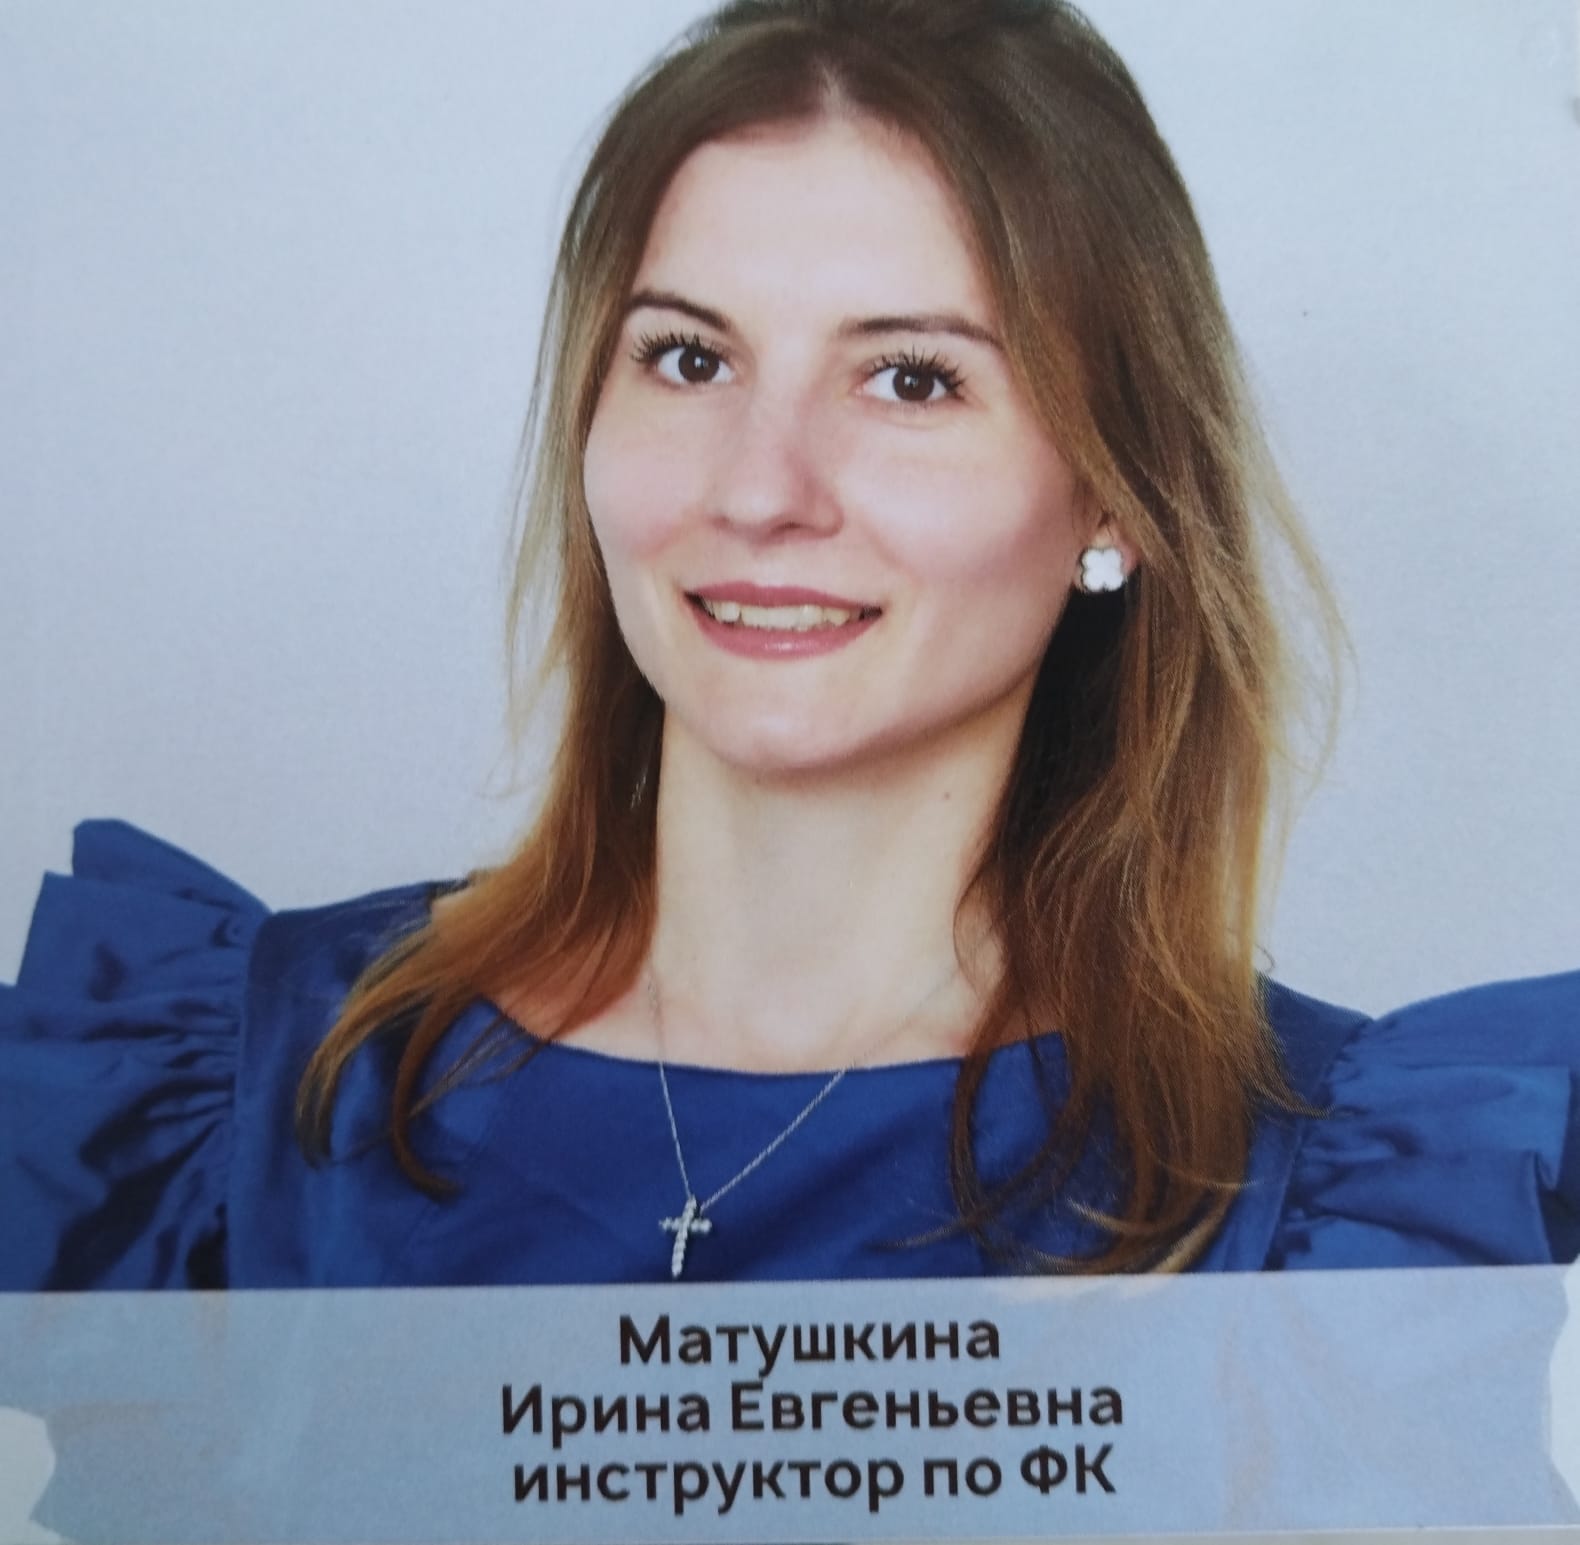 Педагогический работник Матушкина Ирина Евгеньевна.